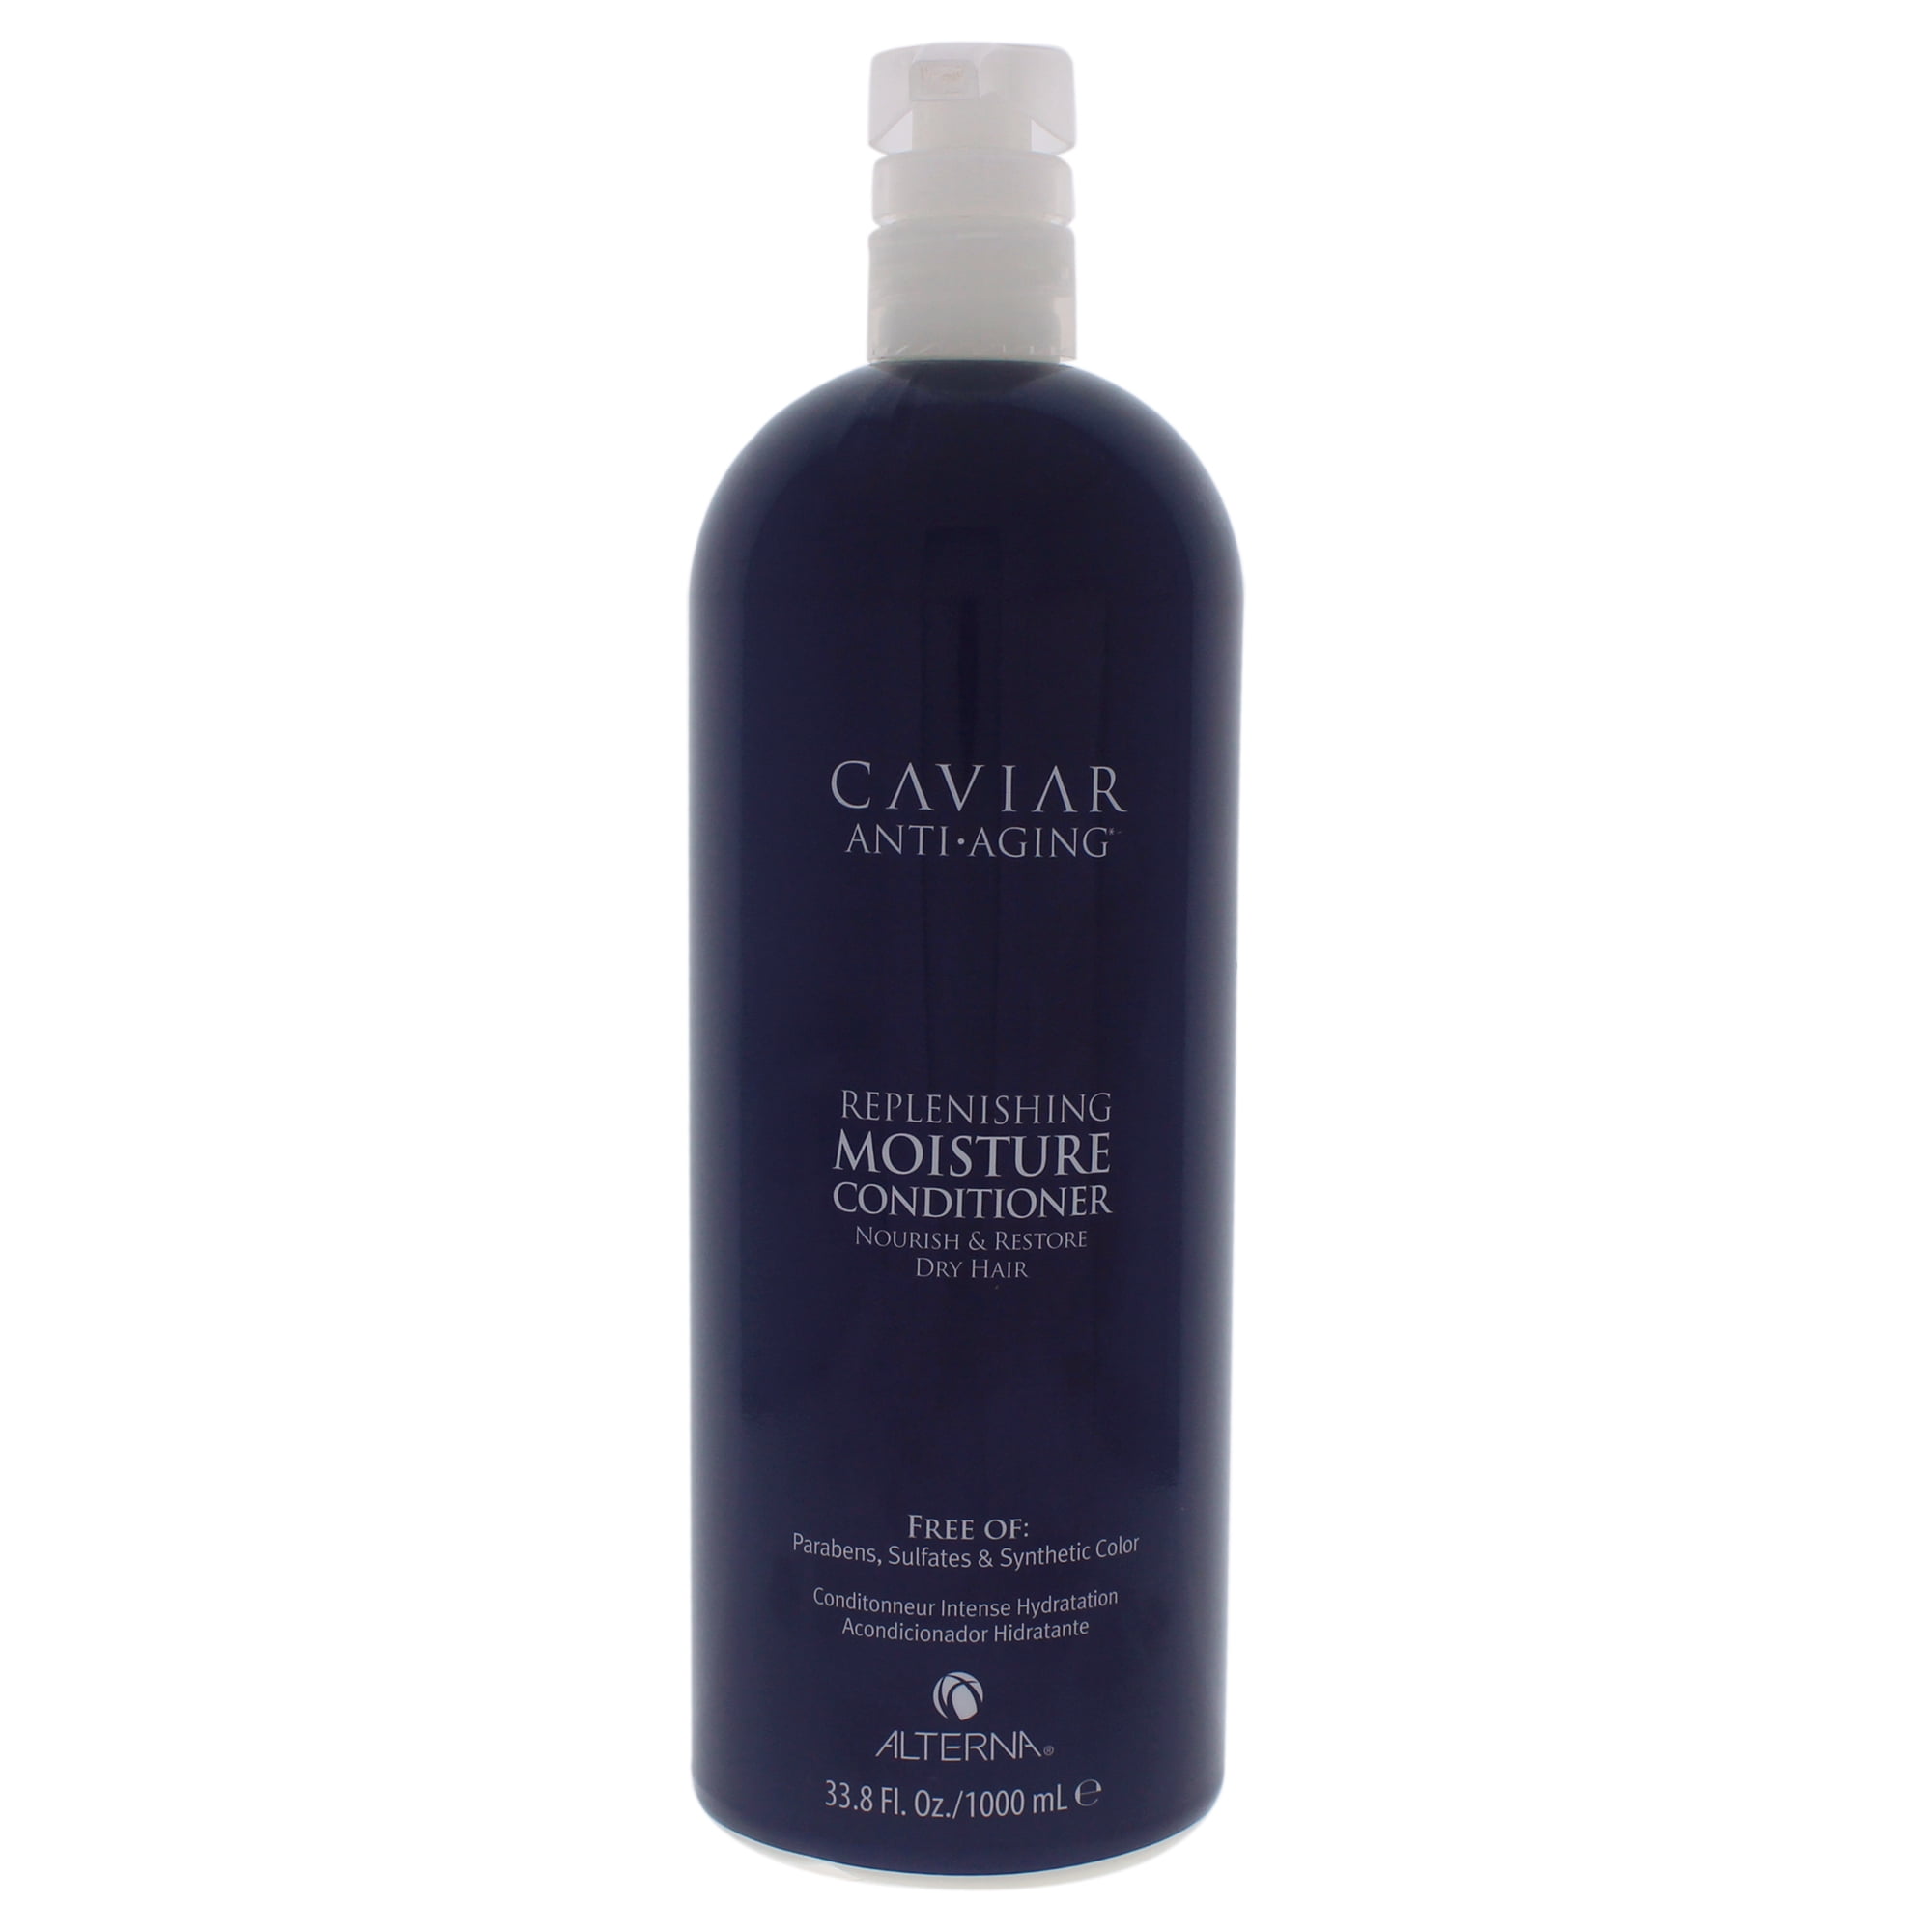 alterna caviar anti aging replenishing moisture conditioner